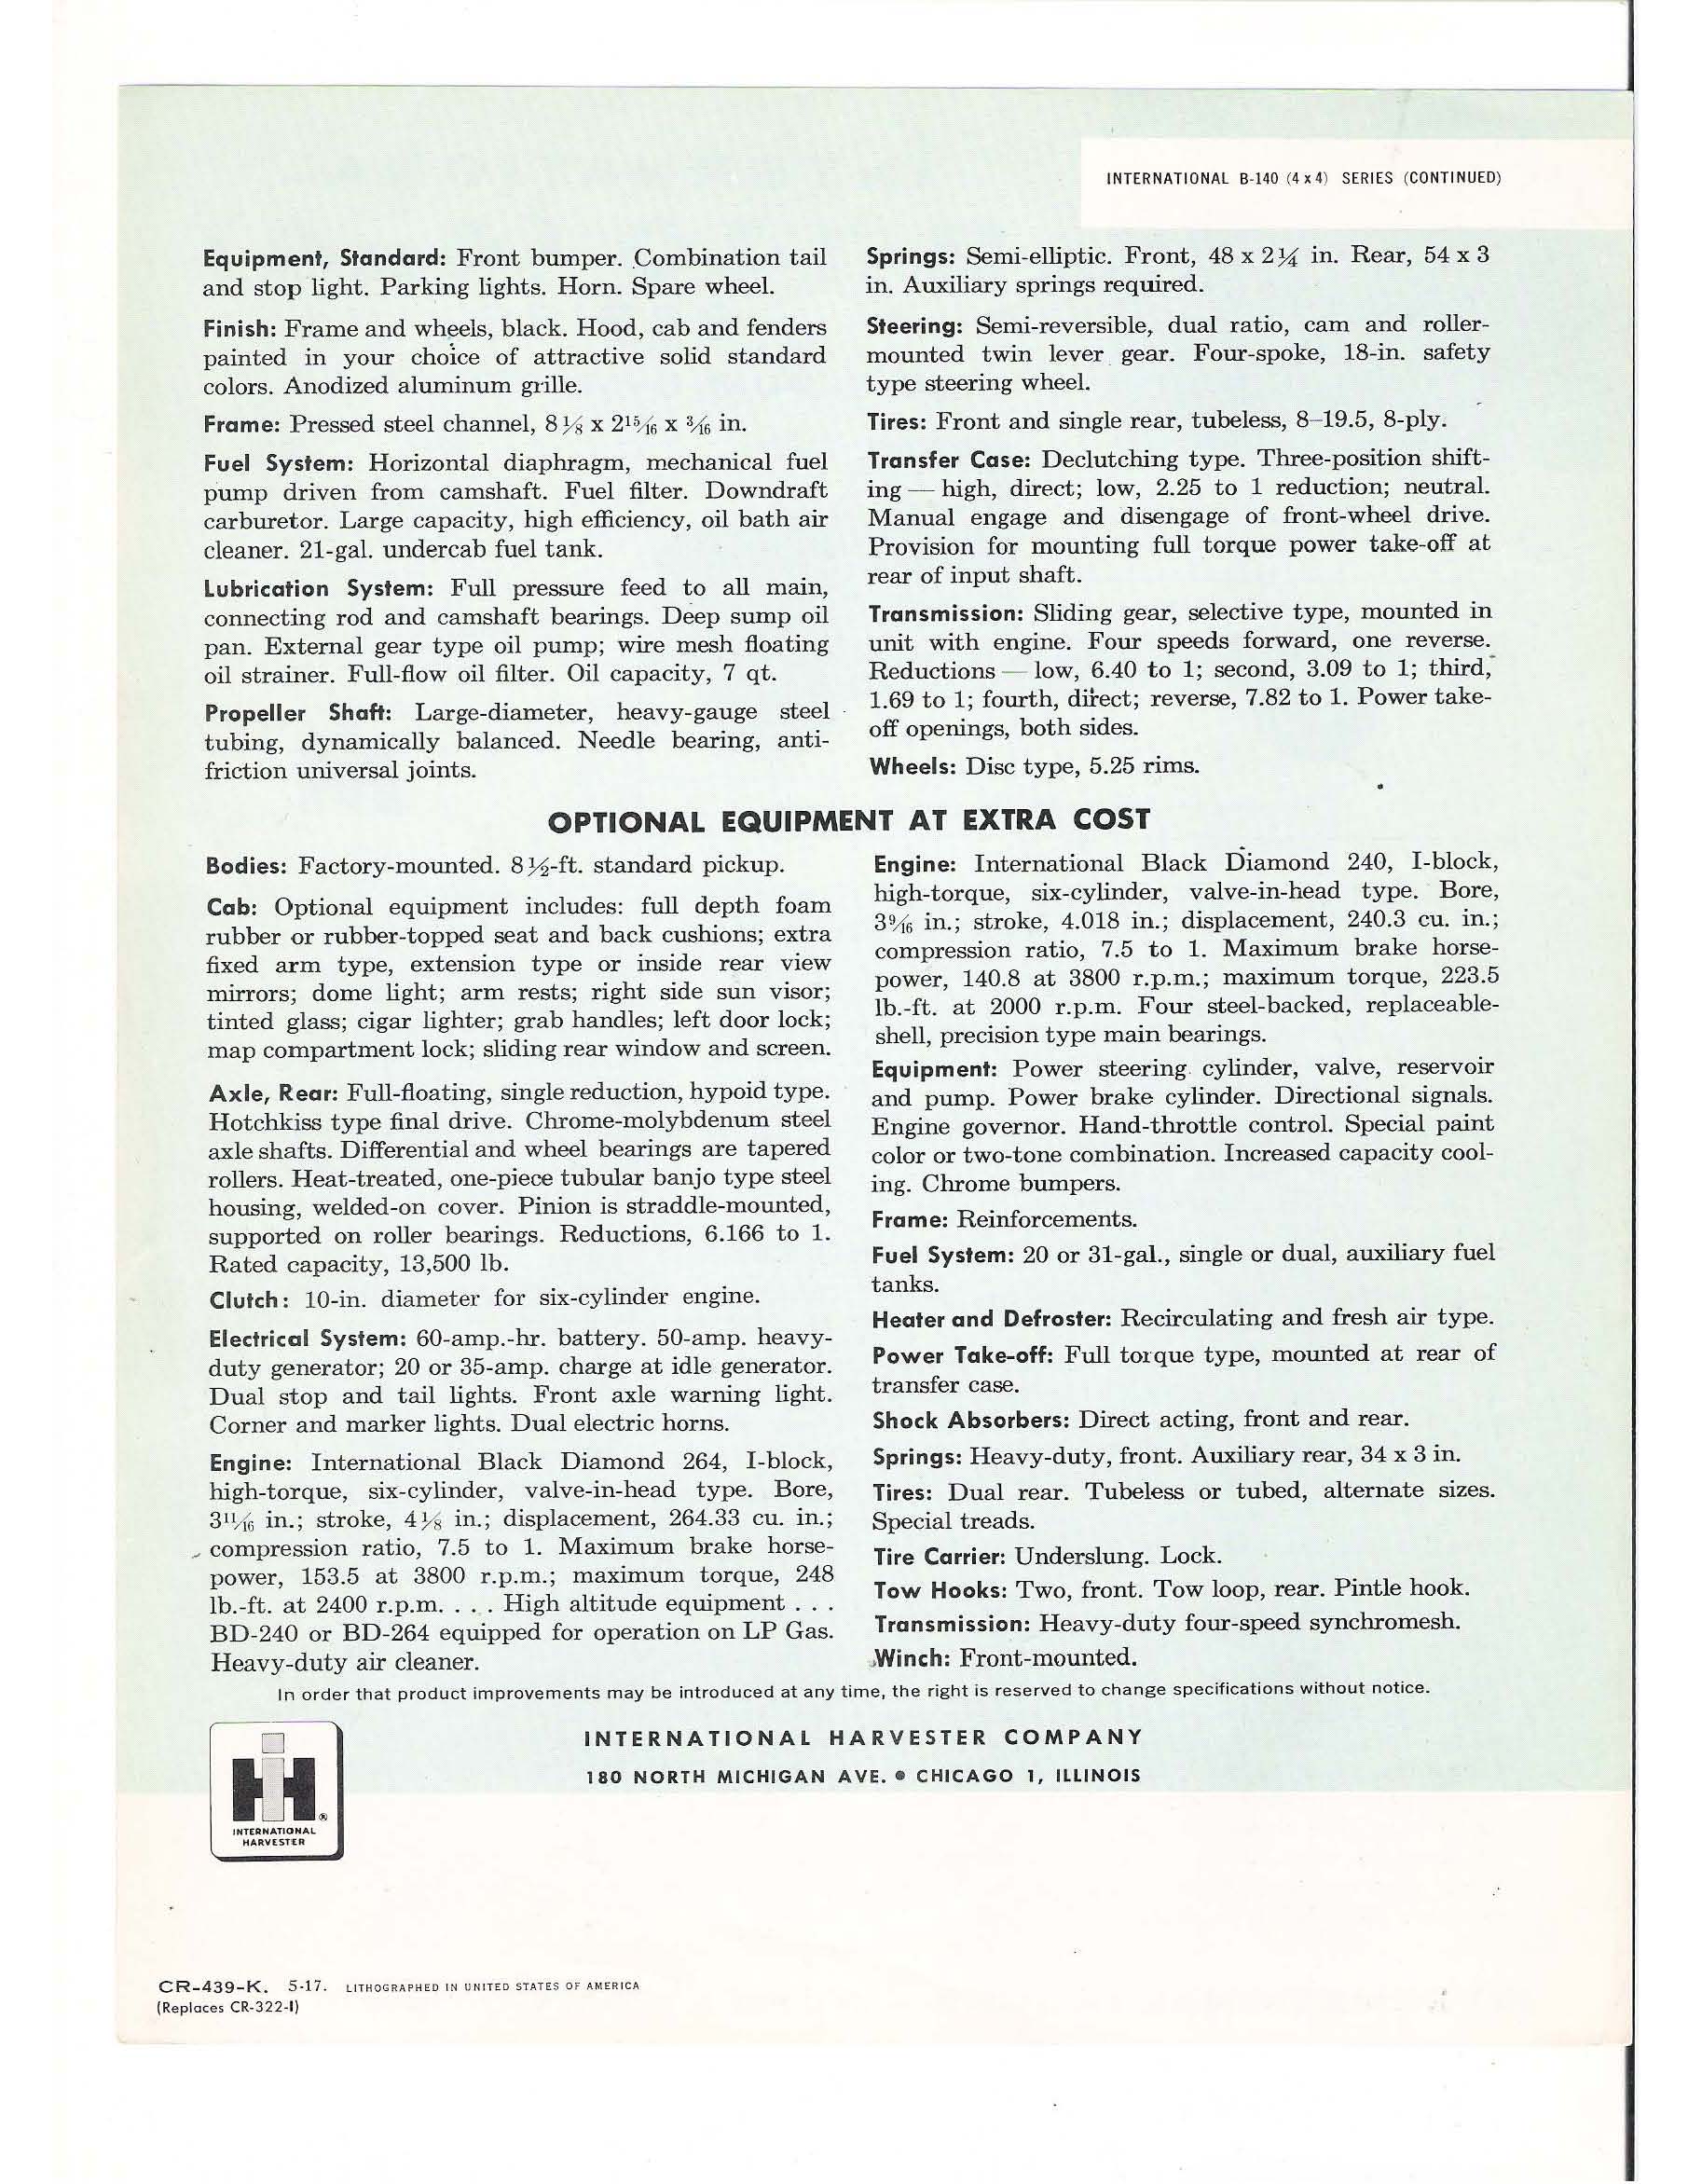 1959 International B-140 4X4 Series Brochure Page 1